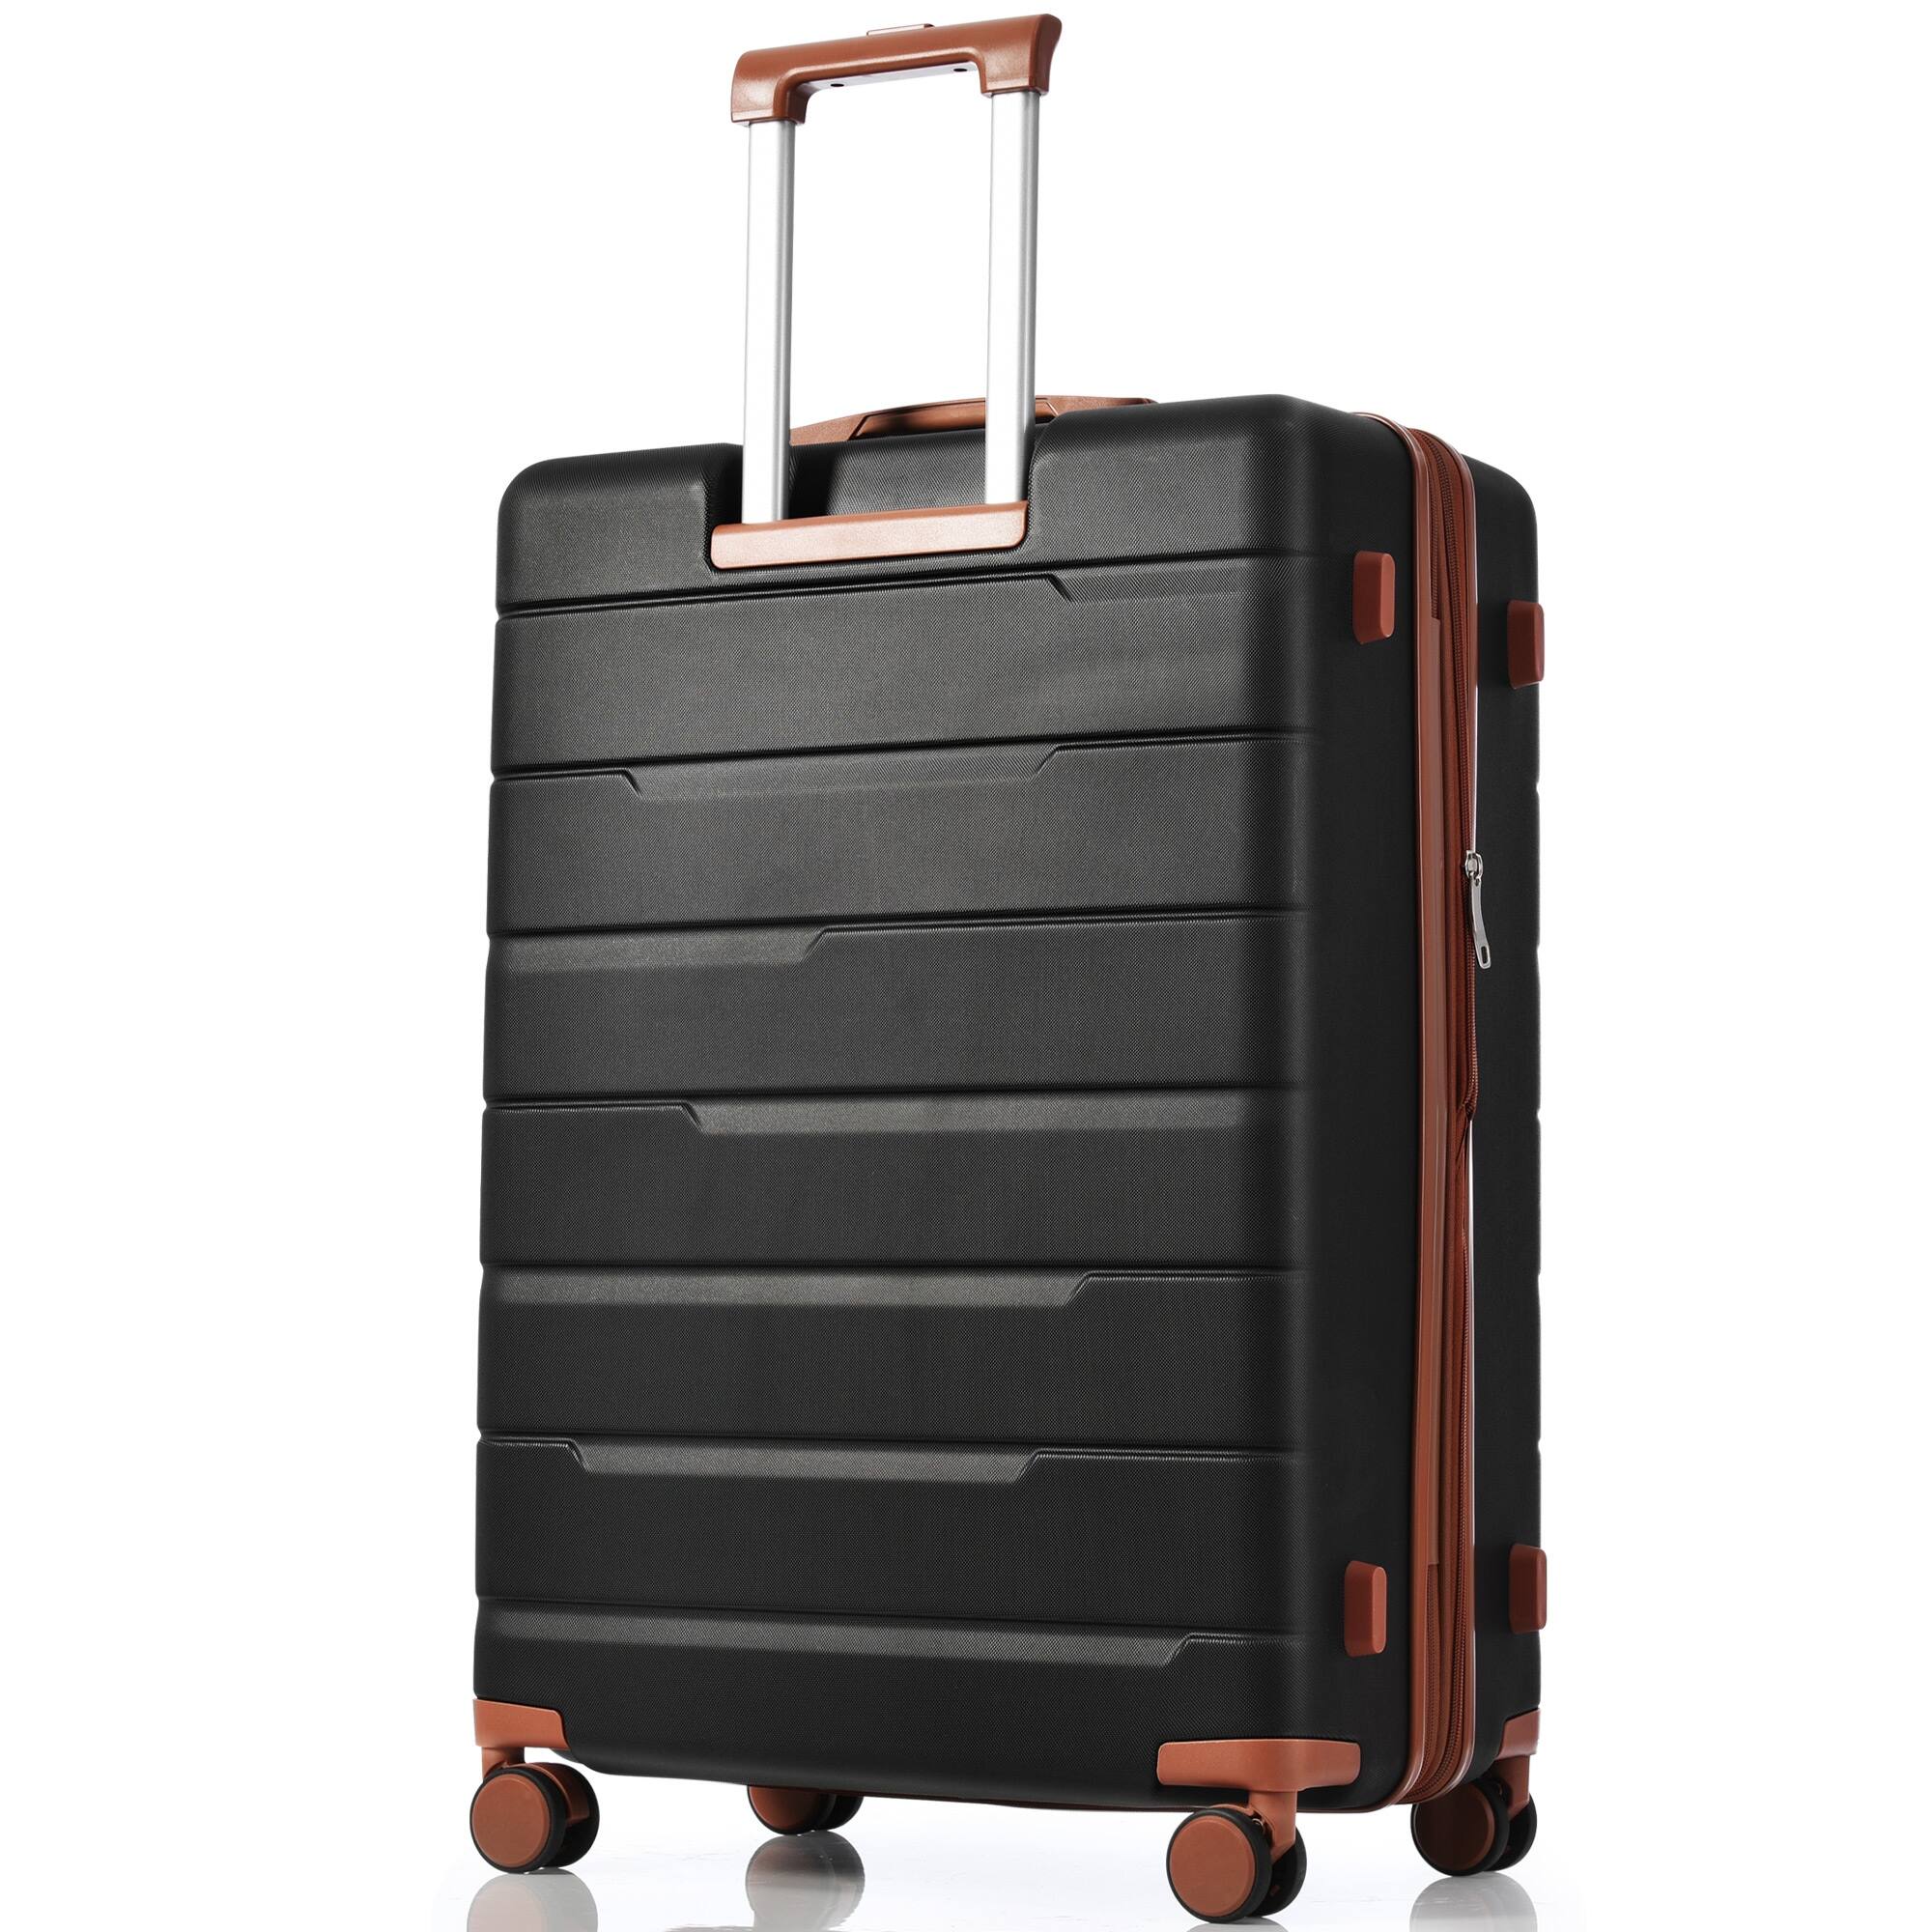 3Pcs Luggage Sets Suitcase Set (20"/24"/28") w/Spinner Wheels, Black Brown